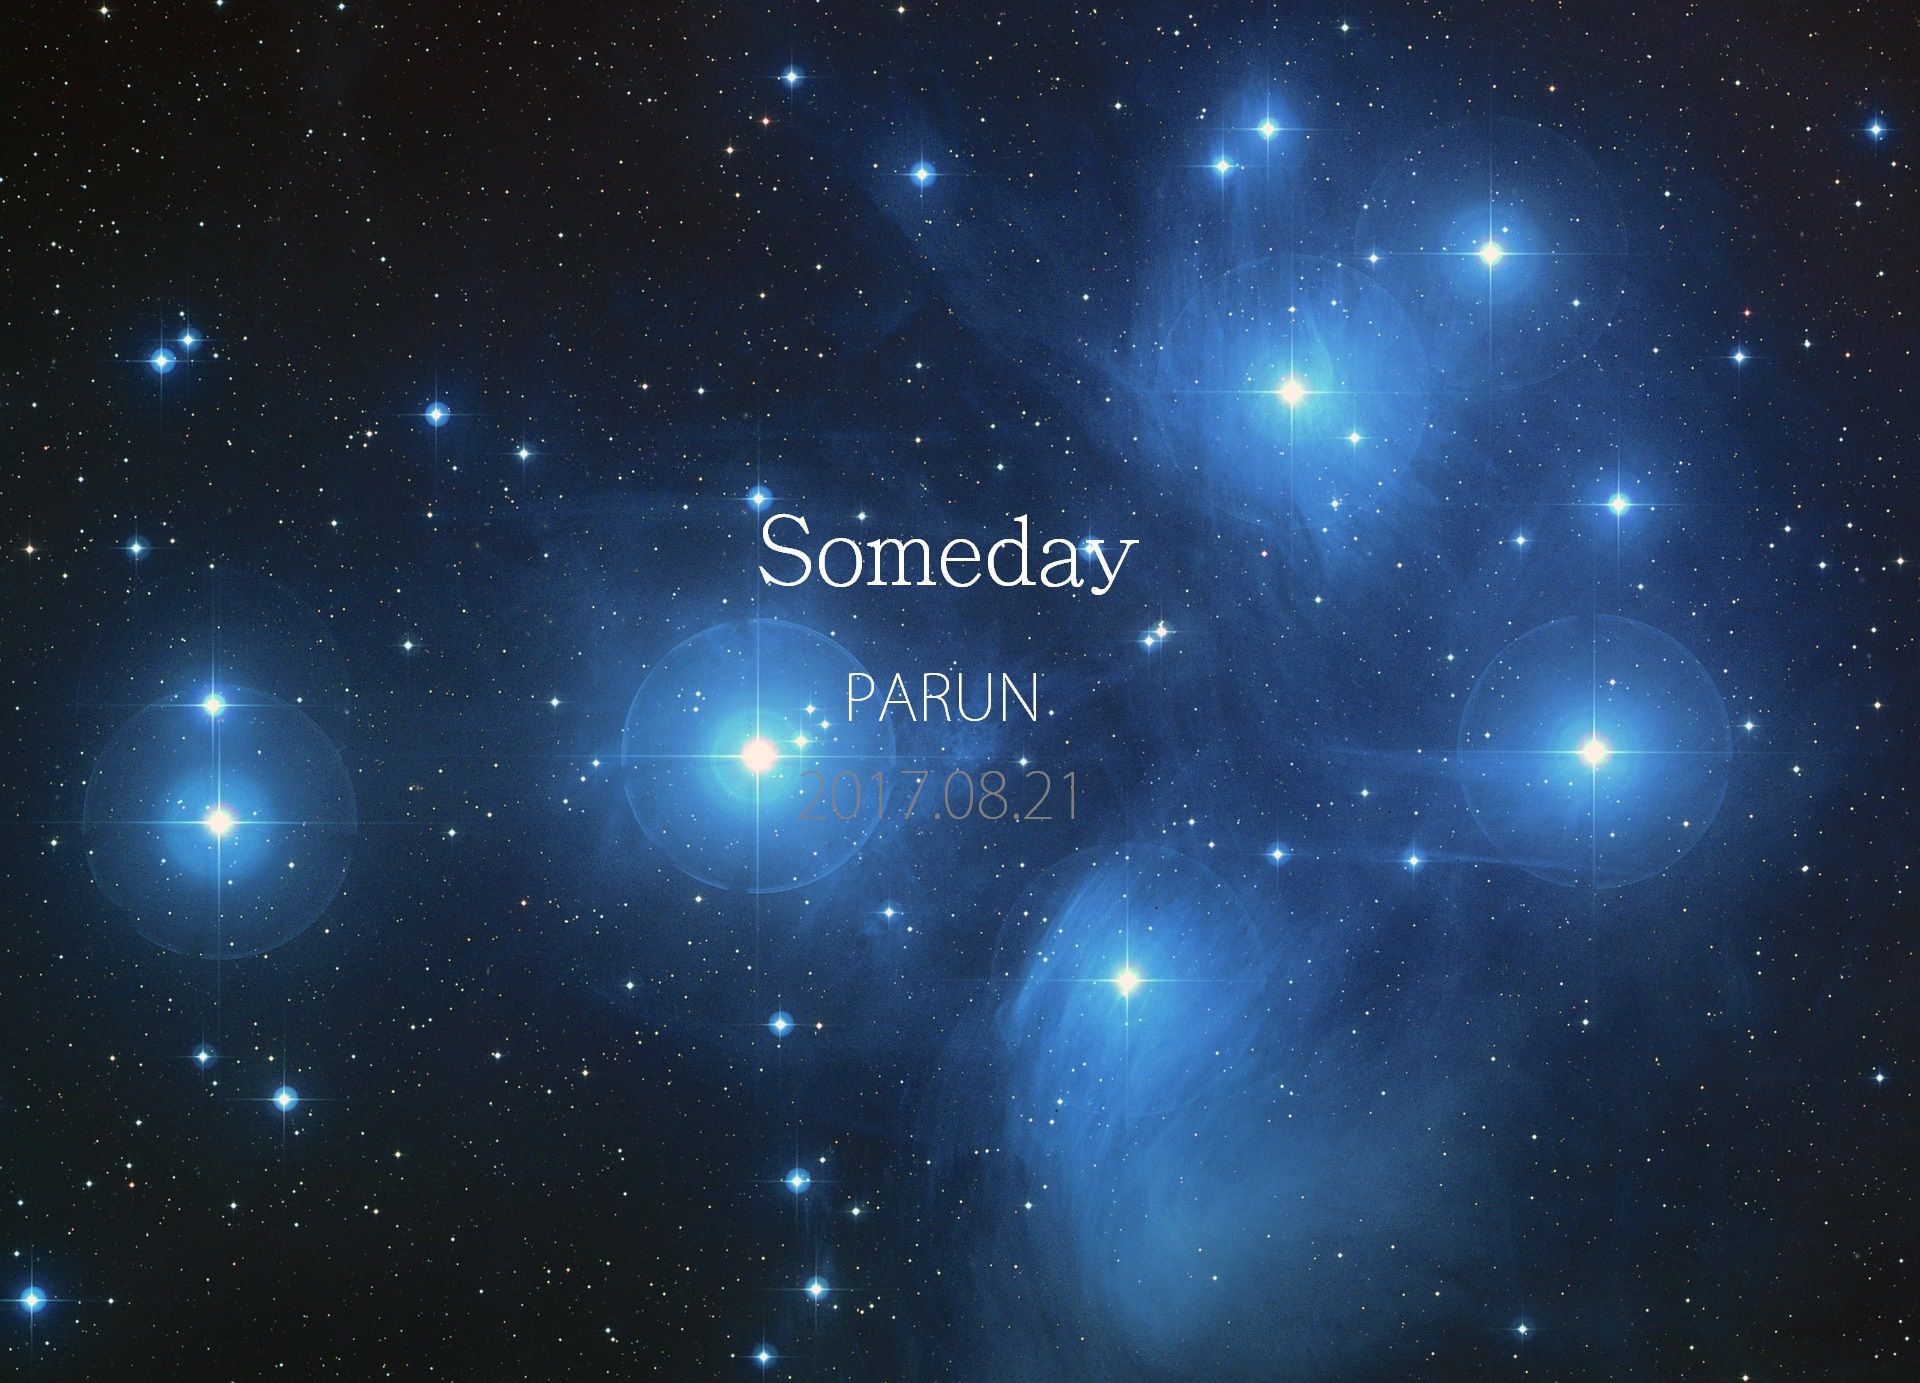 PARUN - Someday 희망 애절 피아노